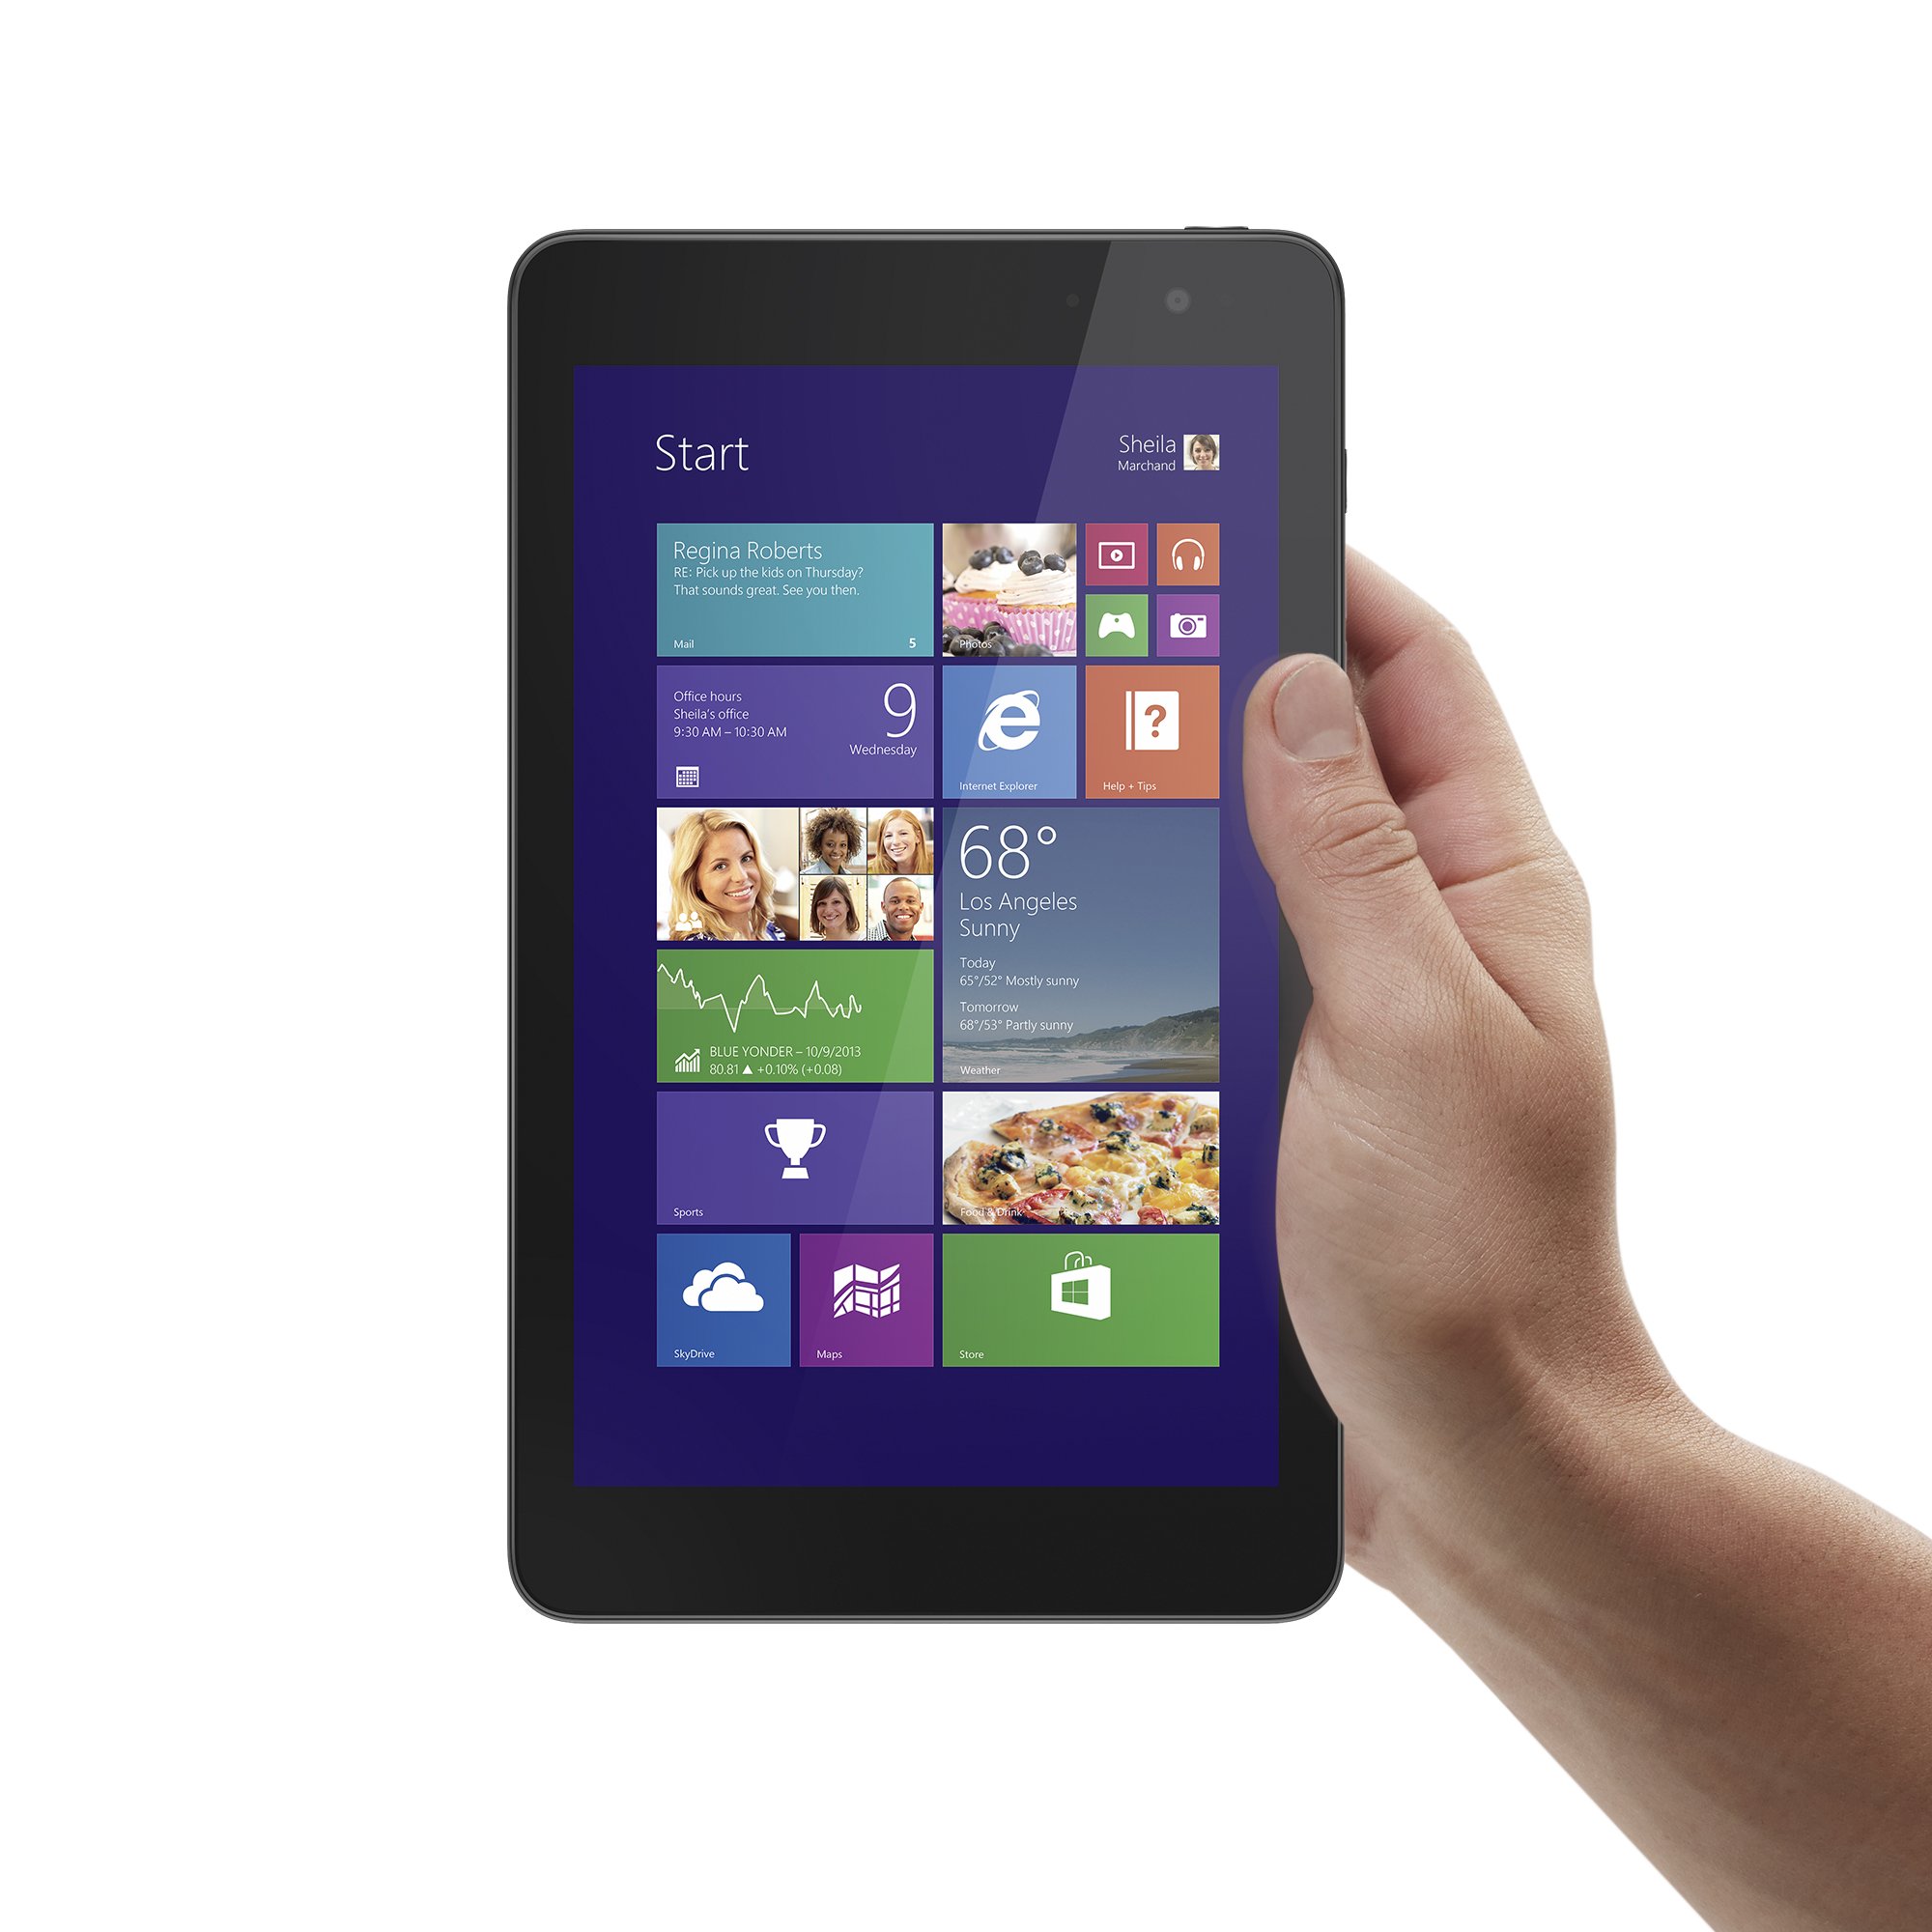 Dell Venue 8 Pro 5000 Series 32 GB Windows 8.1 Tablet